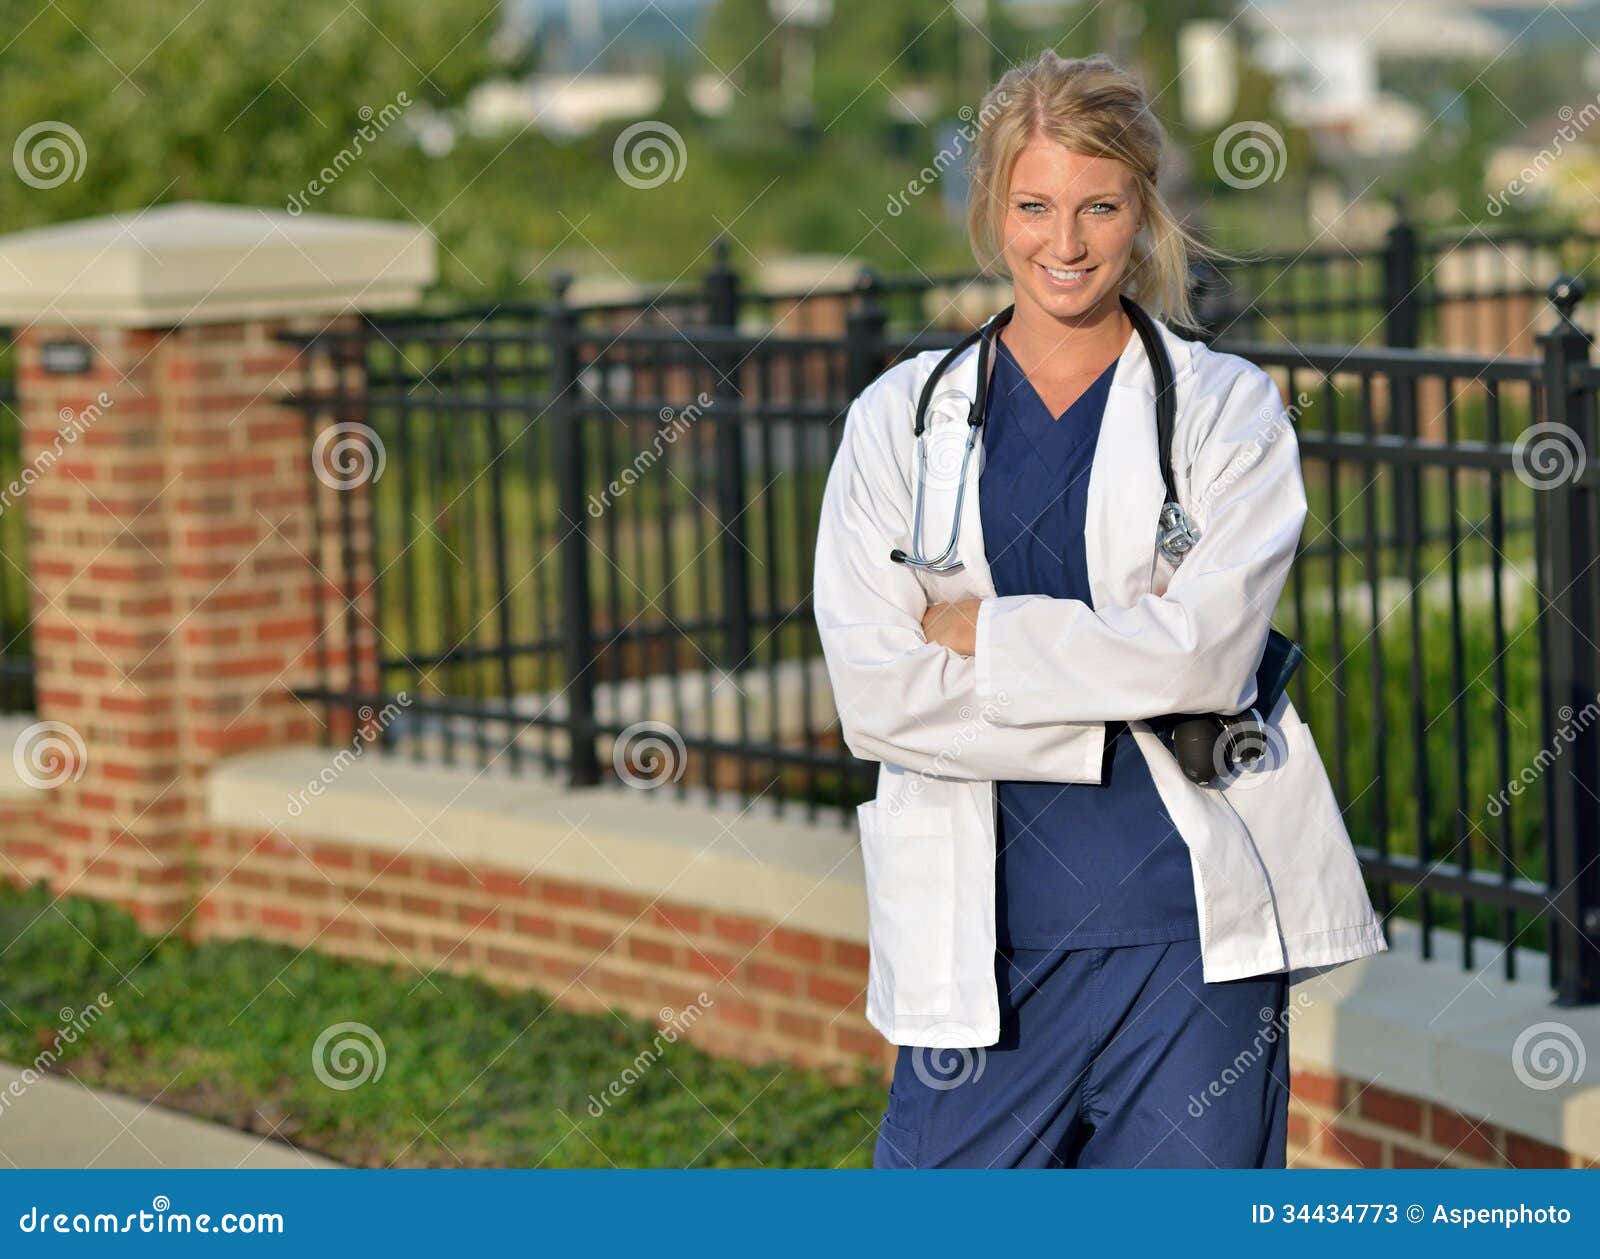 Beautiful Female Healthcare Professional Stock Image - Image of blonde ...